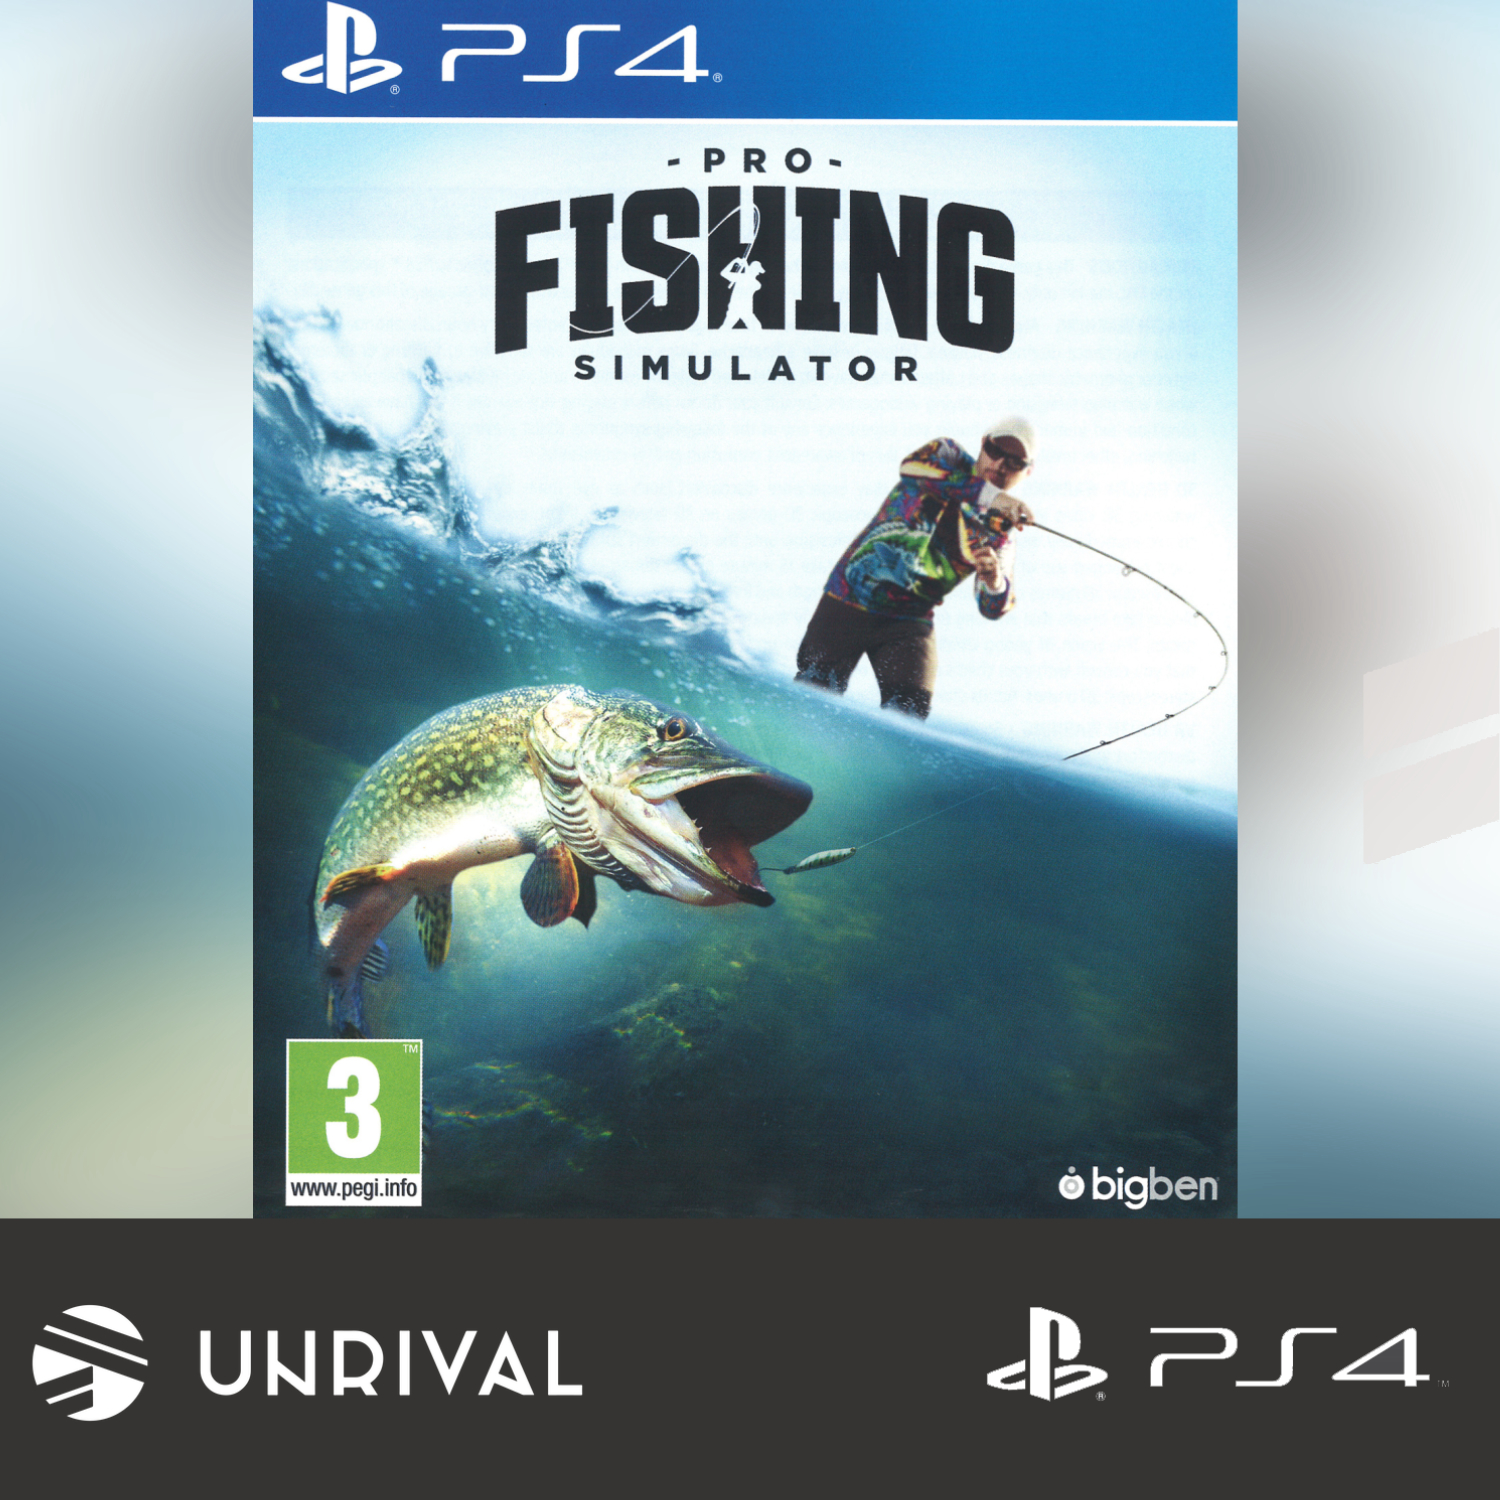 PS4 Pro Fishing Simulator EUR/R2 - Unrival